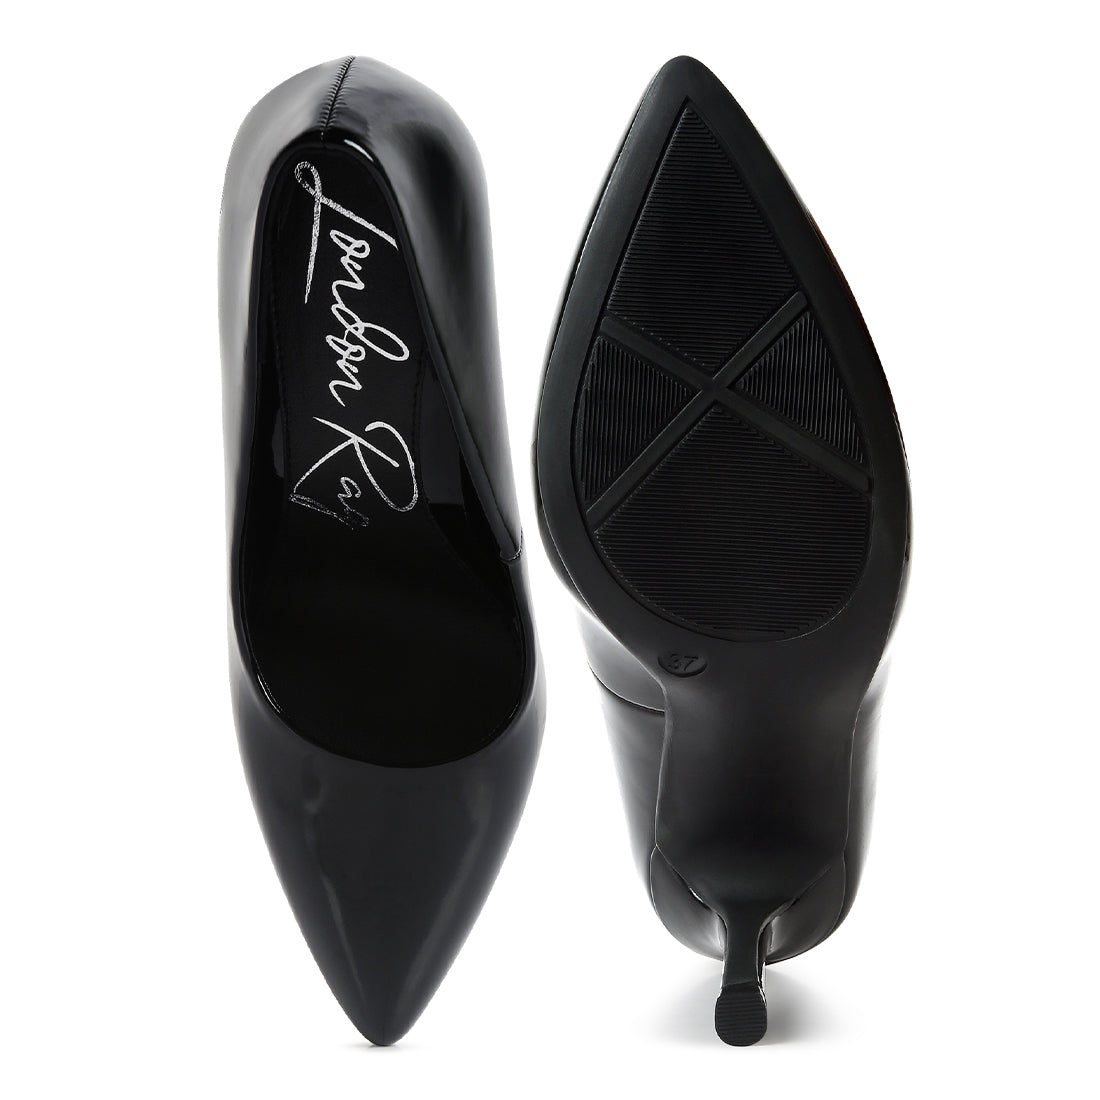 pointed toe stiletto pumps#color_black